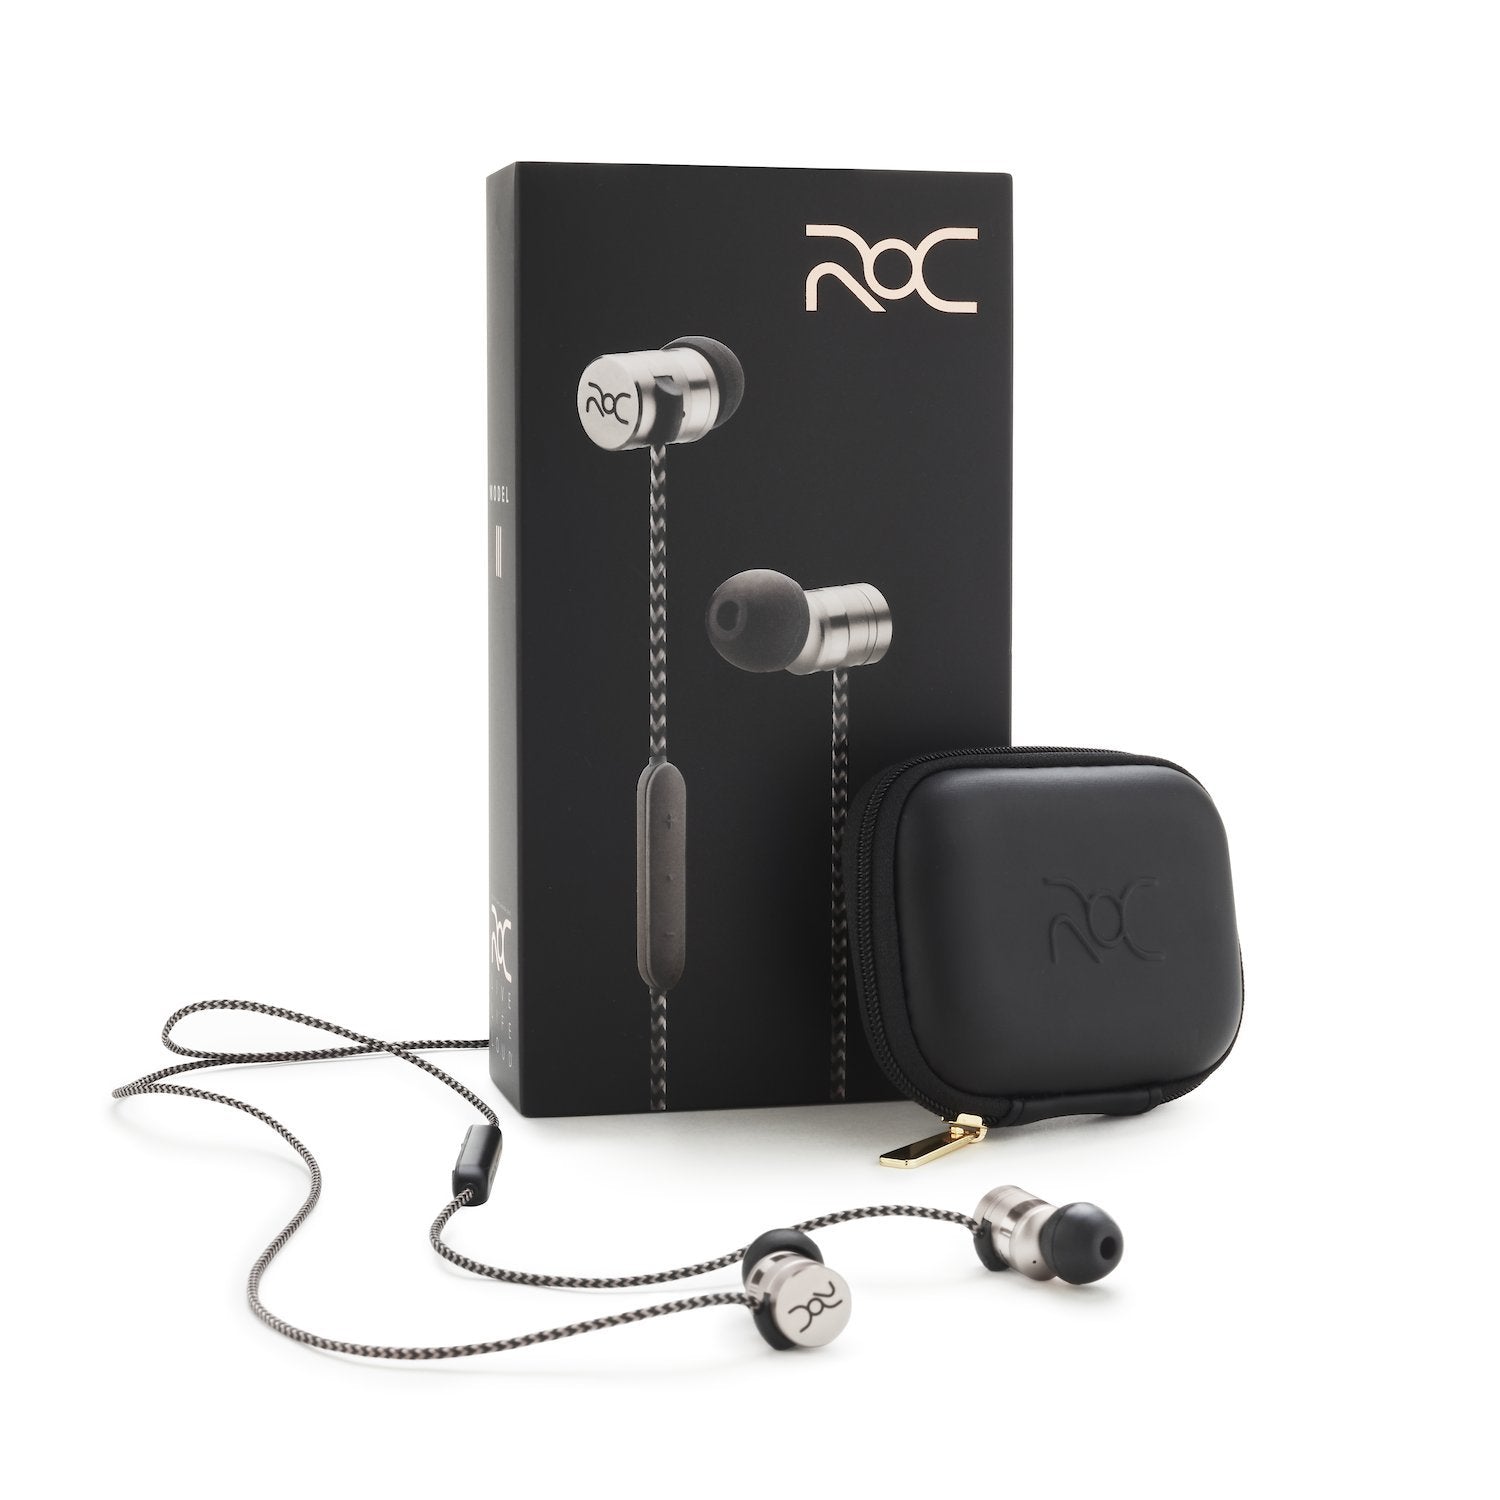 ROC Model III - Silver by Cristiano Ronaldo Wired Sport Earbuds in-Ear Headphones Silver